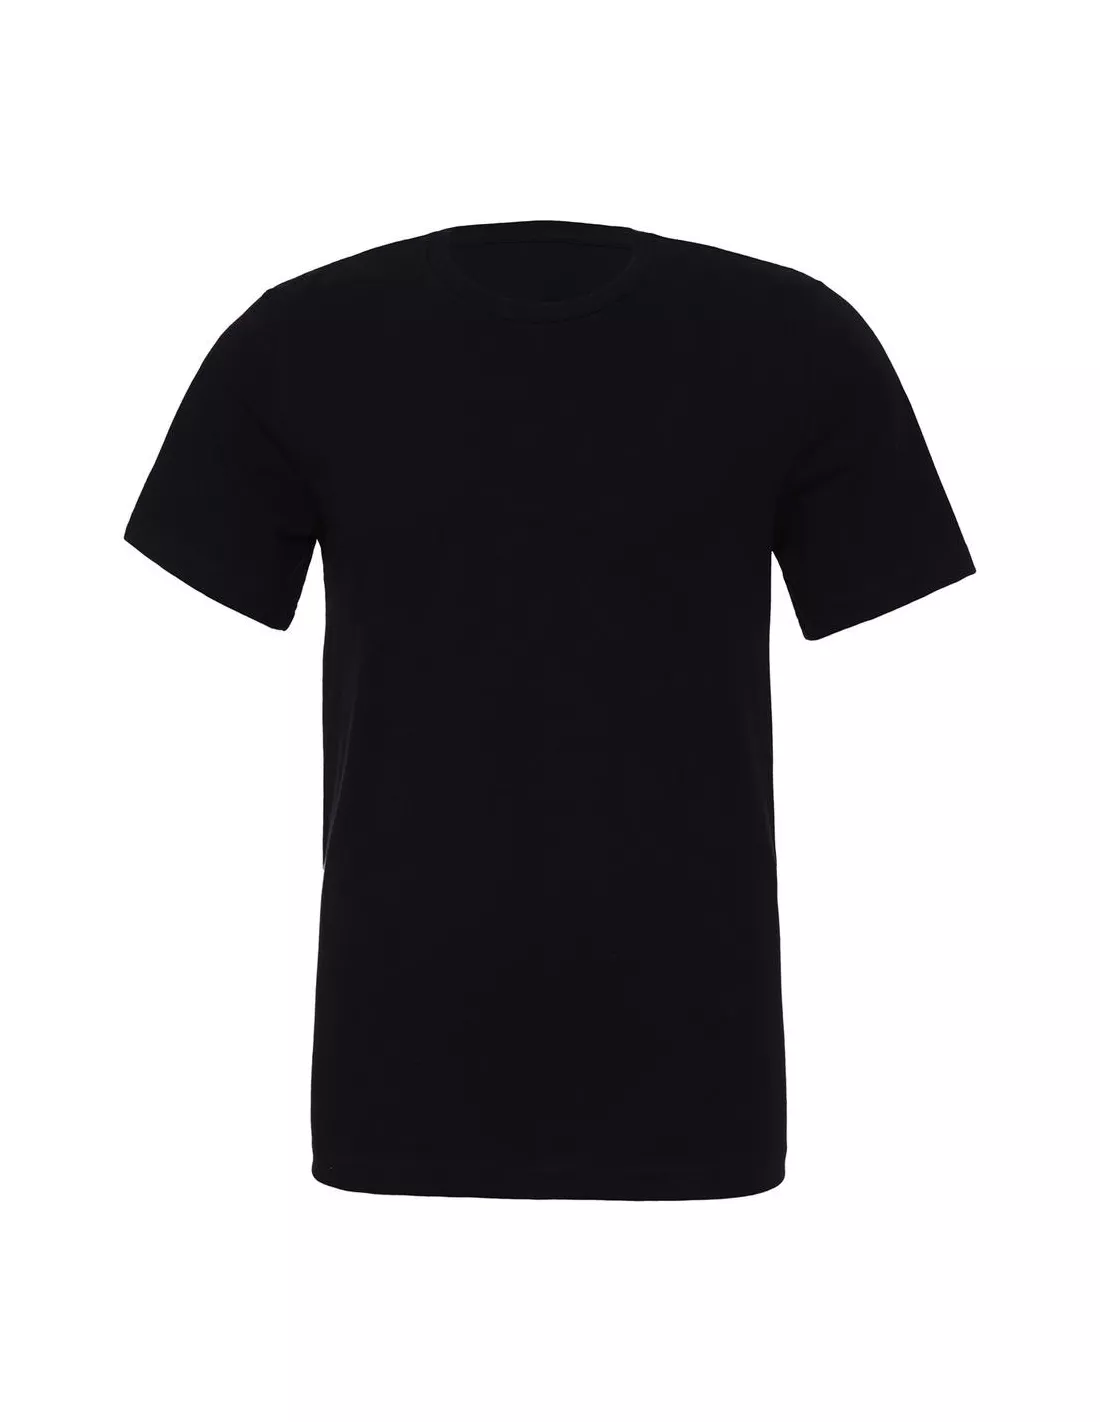 Camiseta Jersey manga corta unisex 